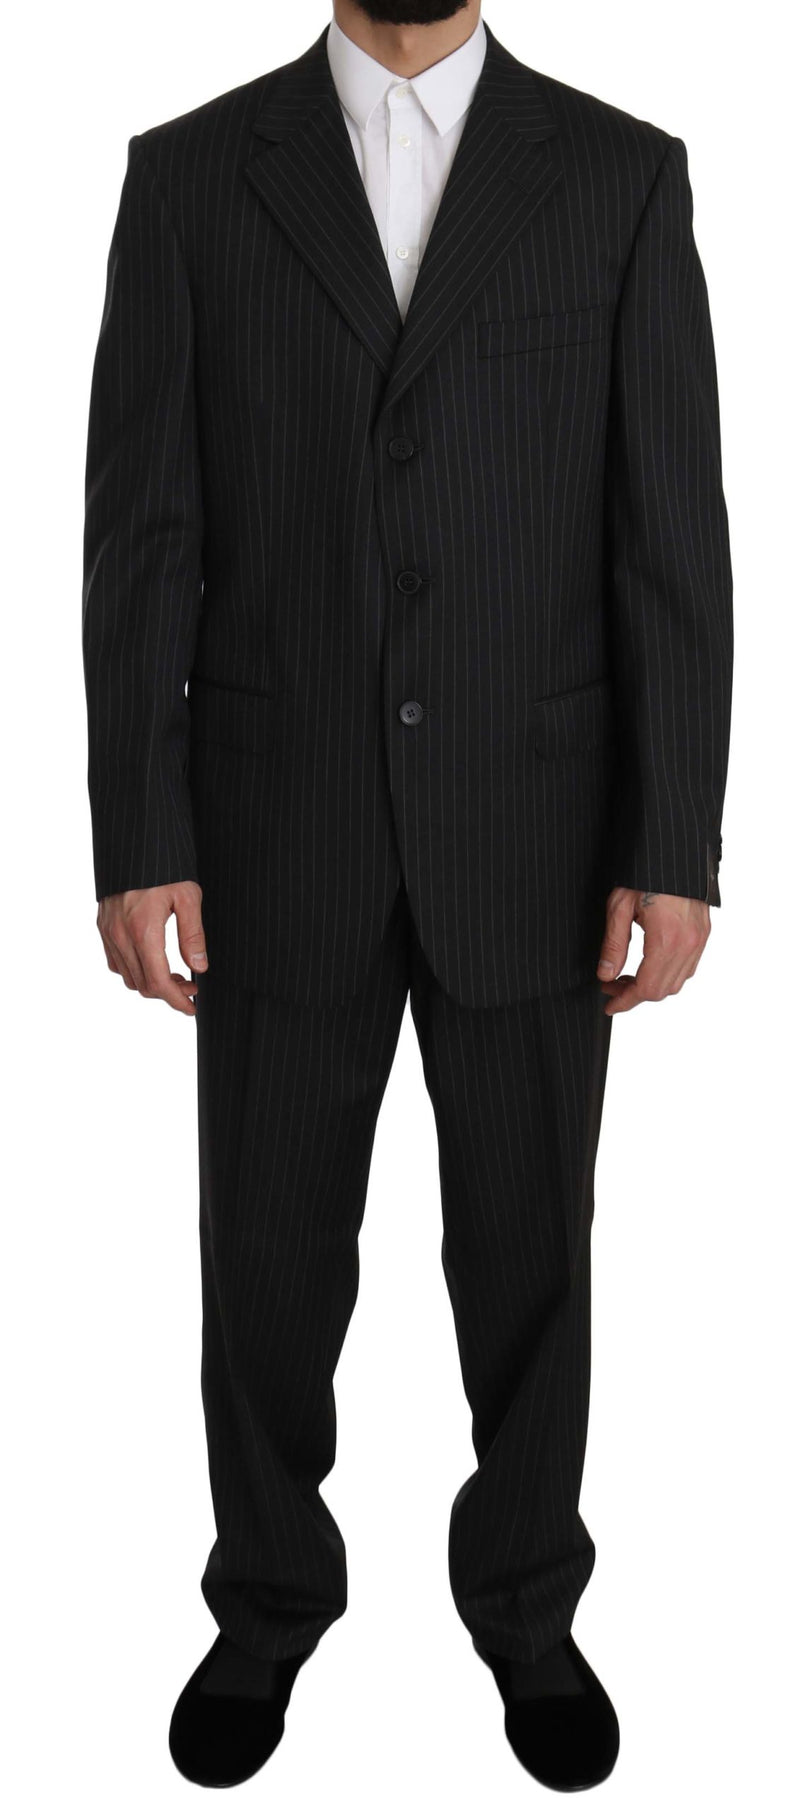 Z ZEGNA Elegant Black Striped Wool Men's Suit